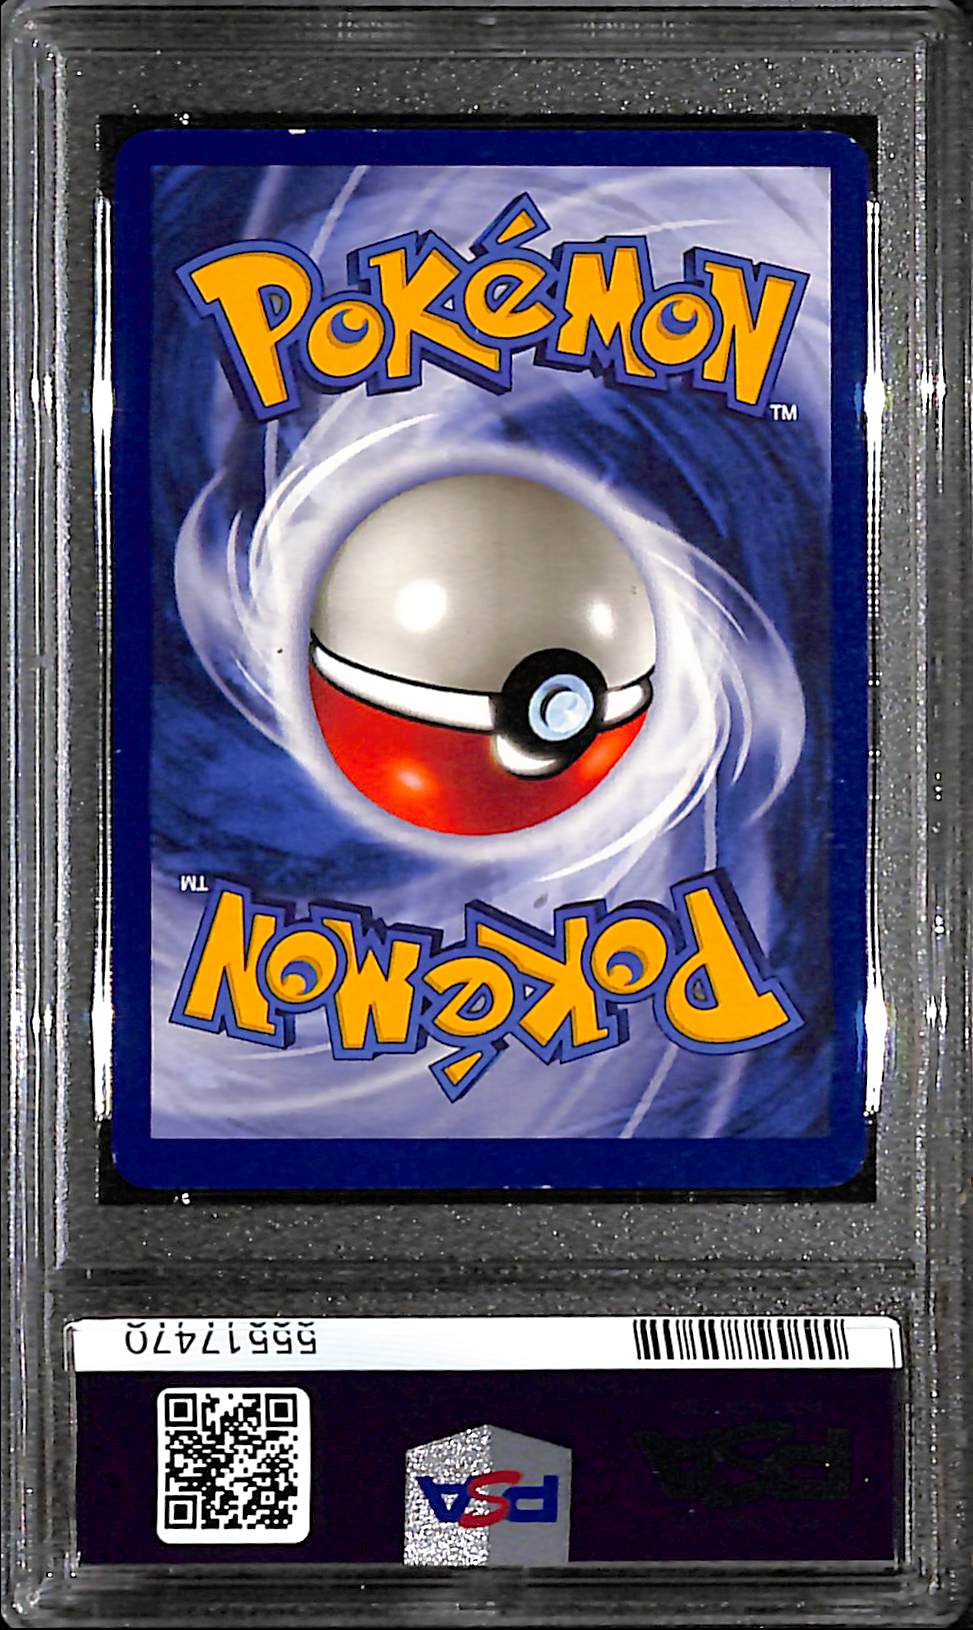 PSA9 - 1999 Pokemon - Victreebel Holo  14/64 - Jungle - No Symbol - TCGroupAU